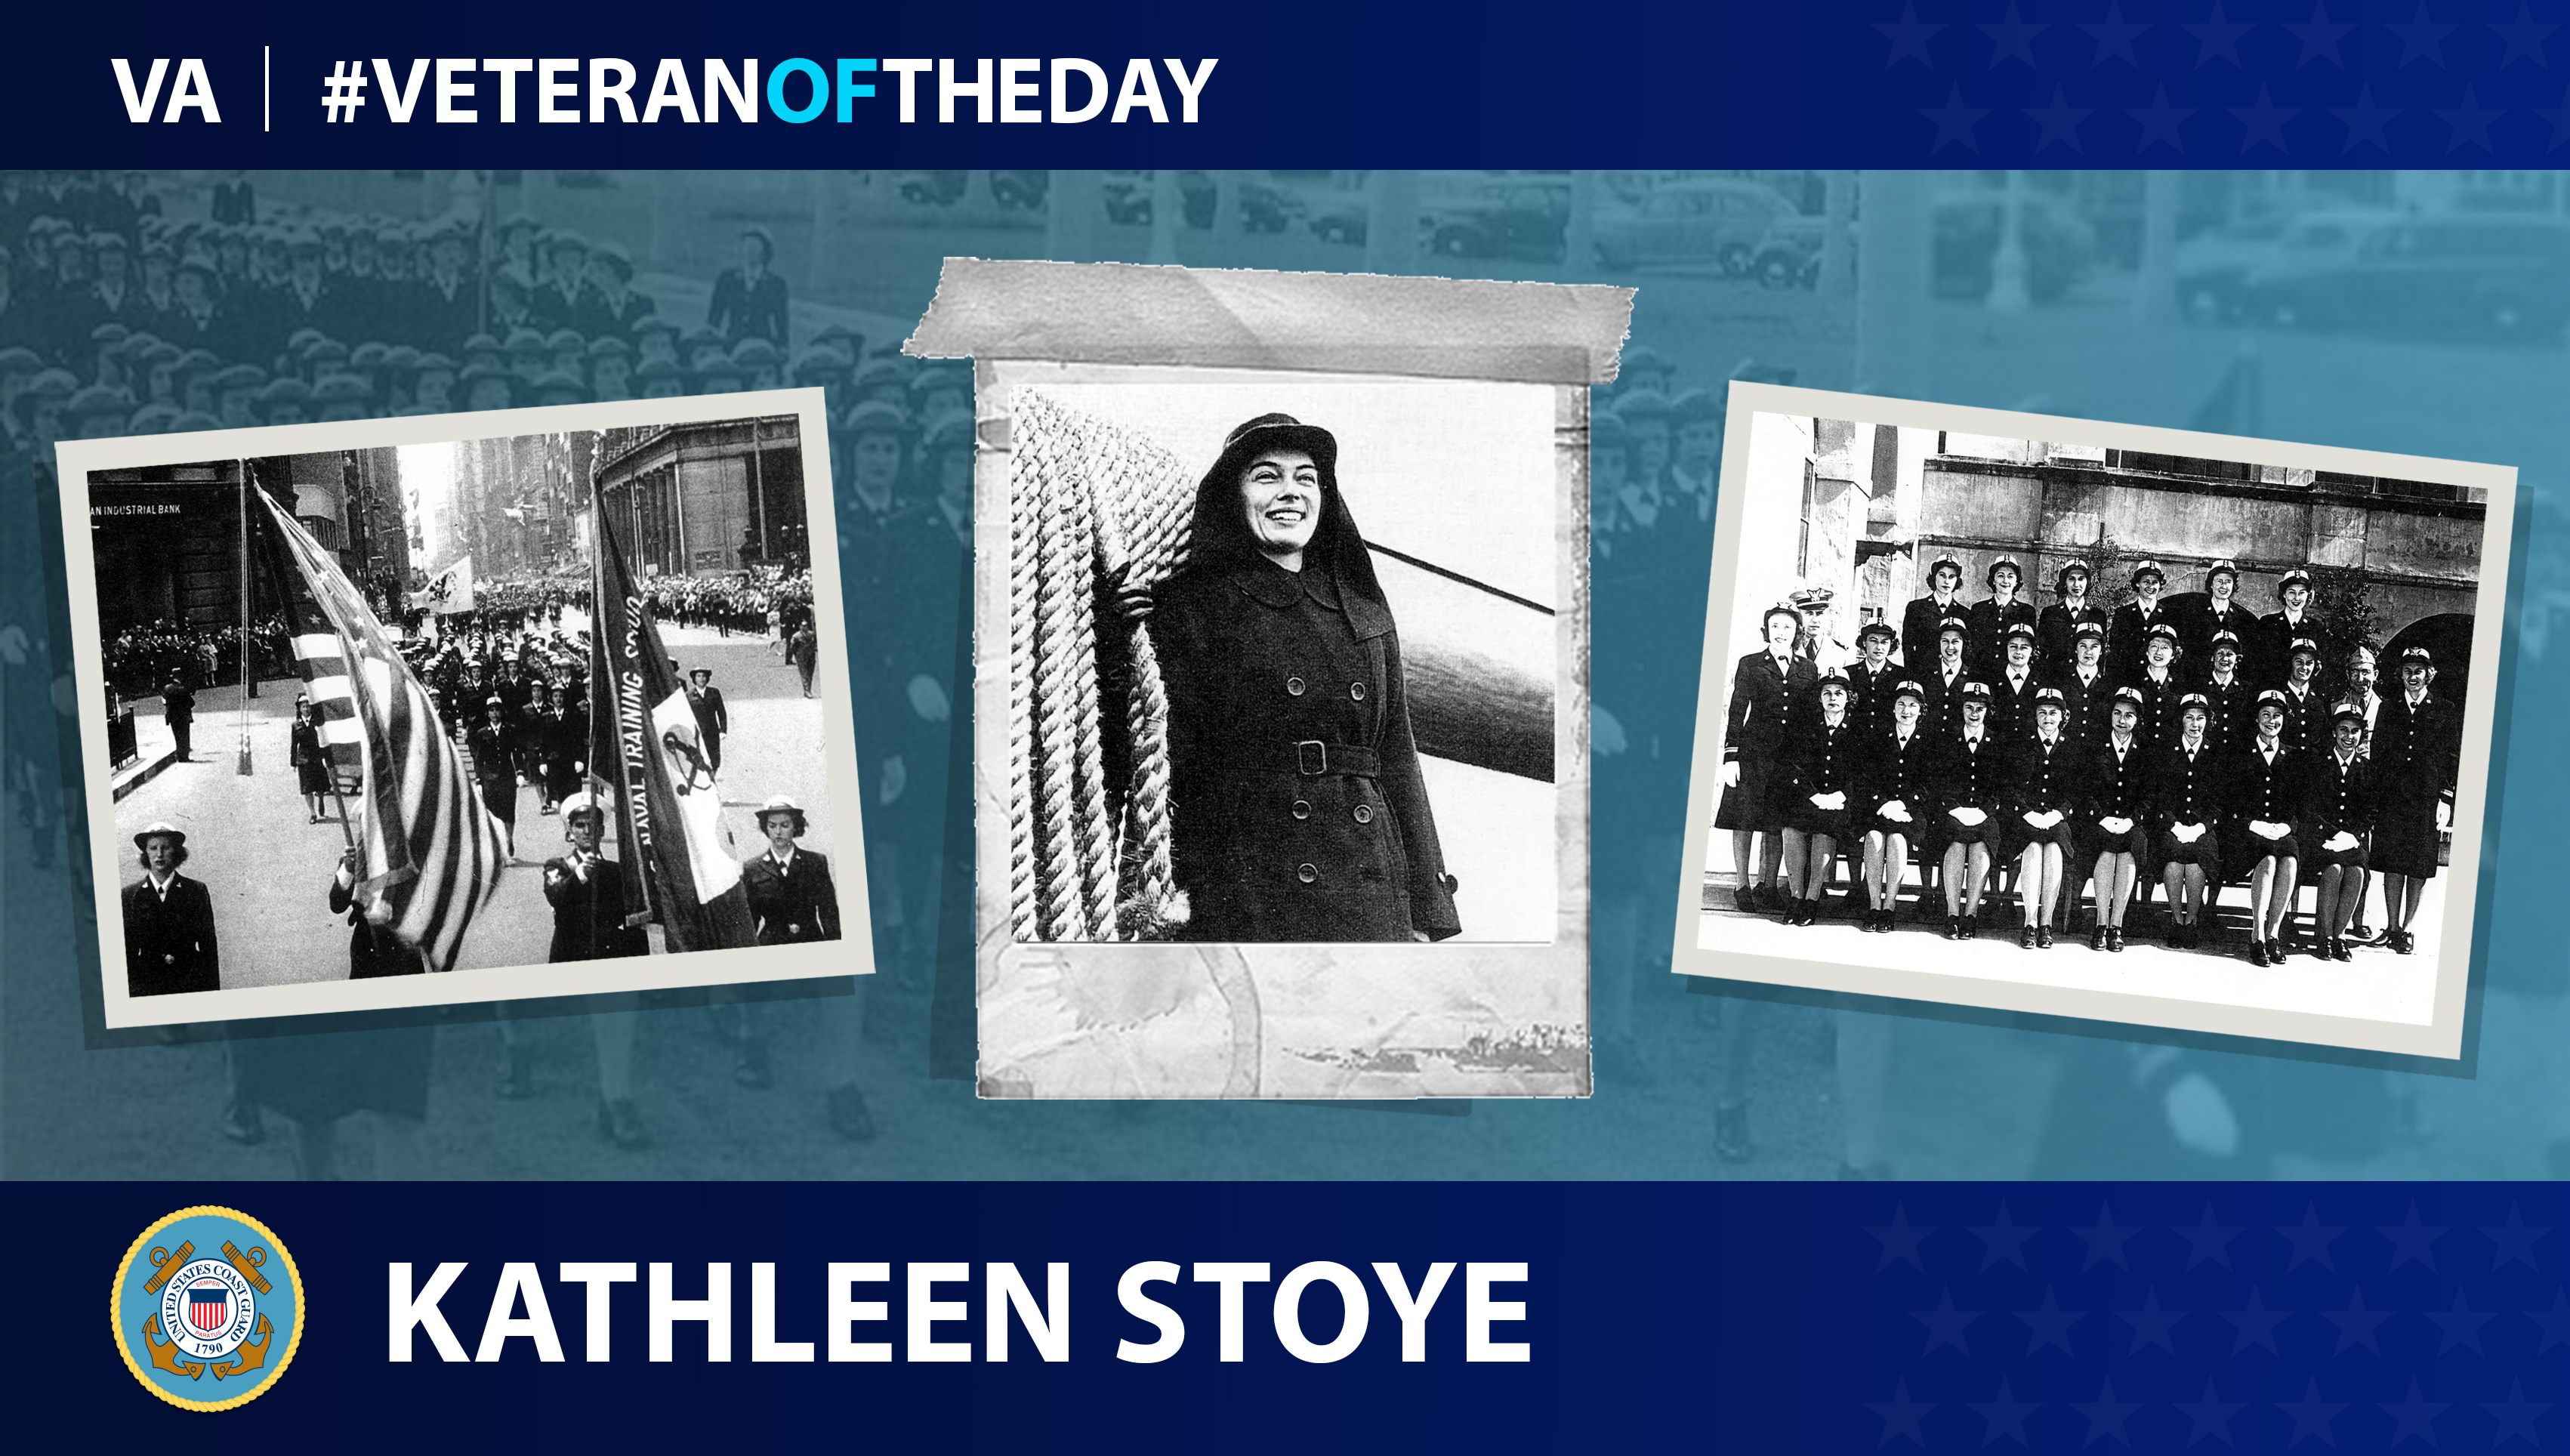 Coast Guard Veteran Kathleen Thomson Stoye is today's Veteran of the Day.